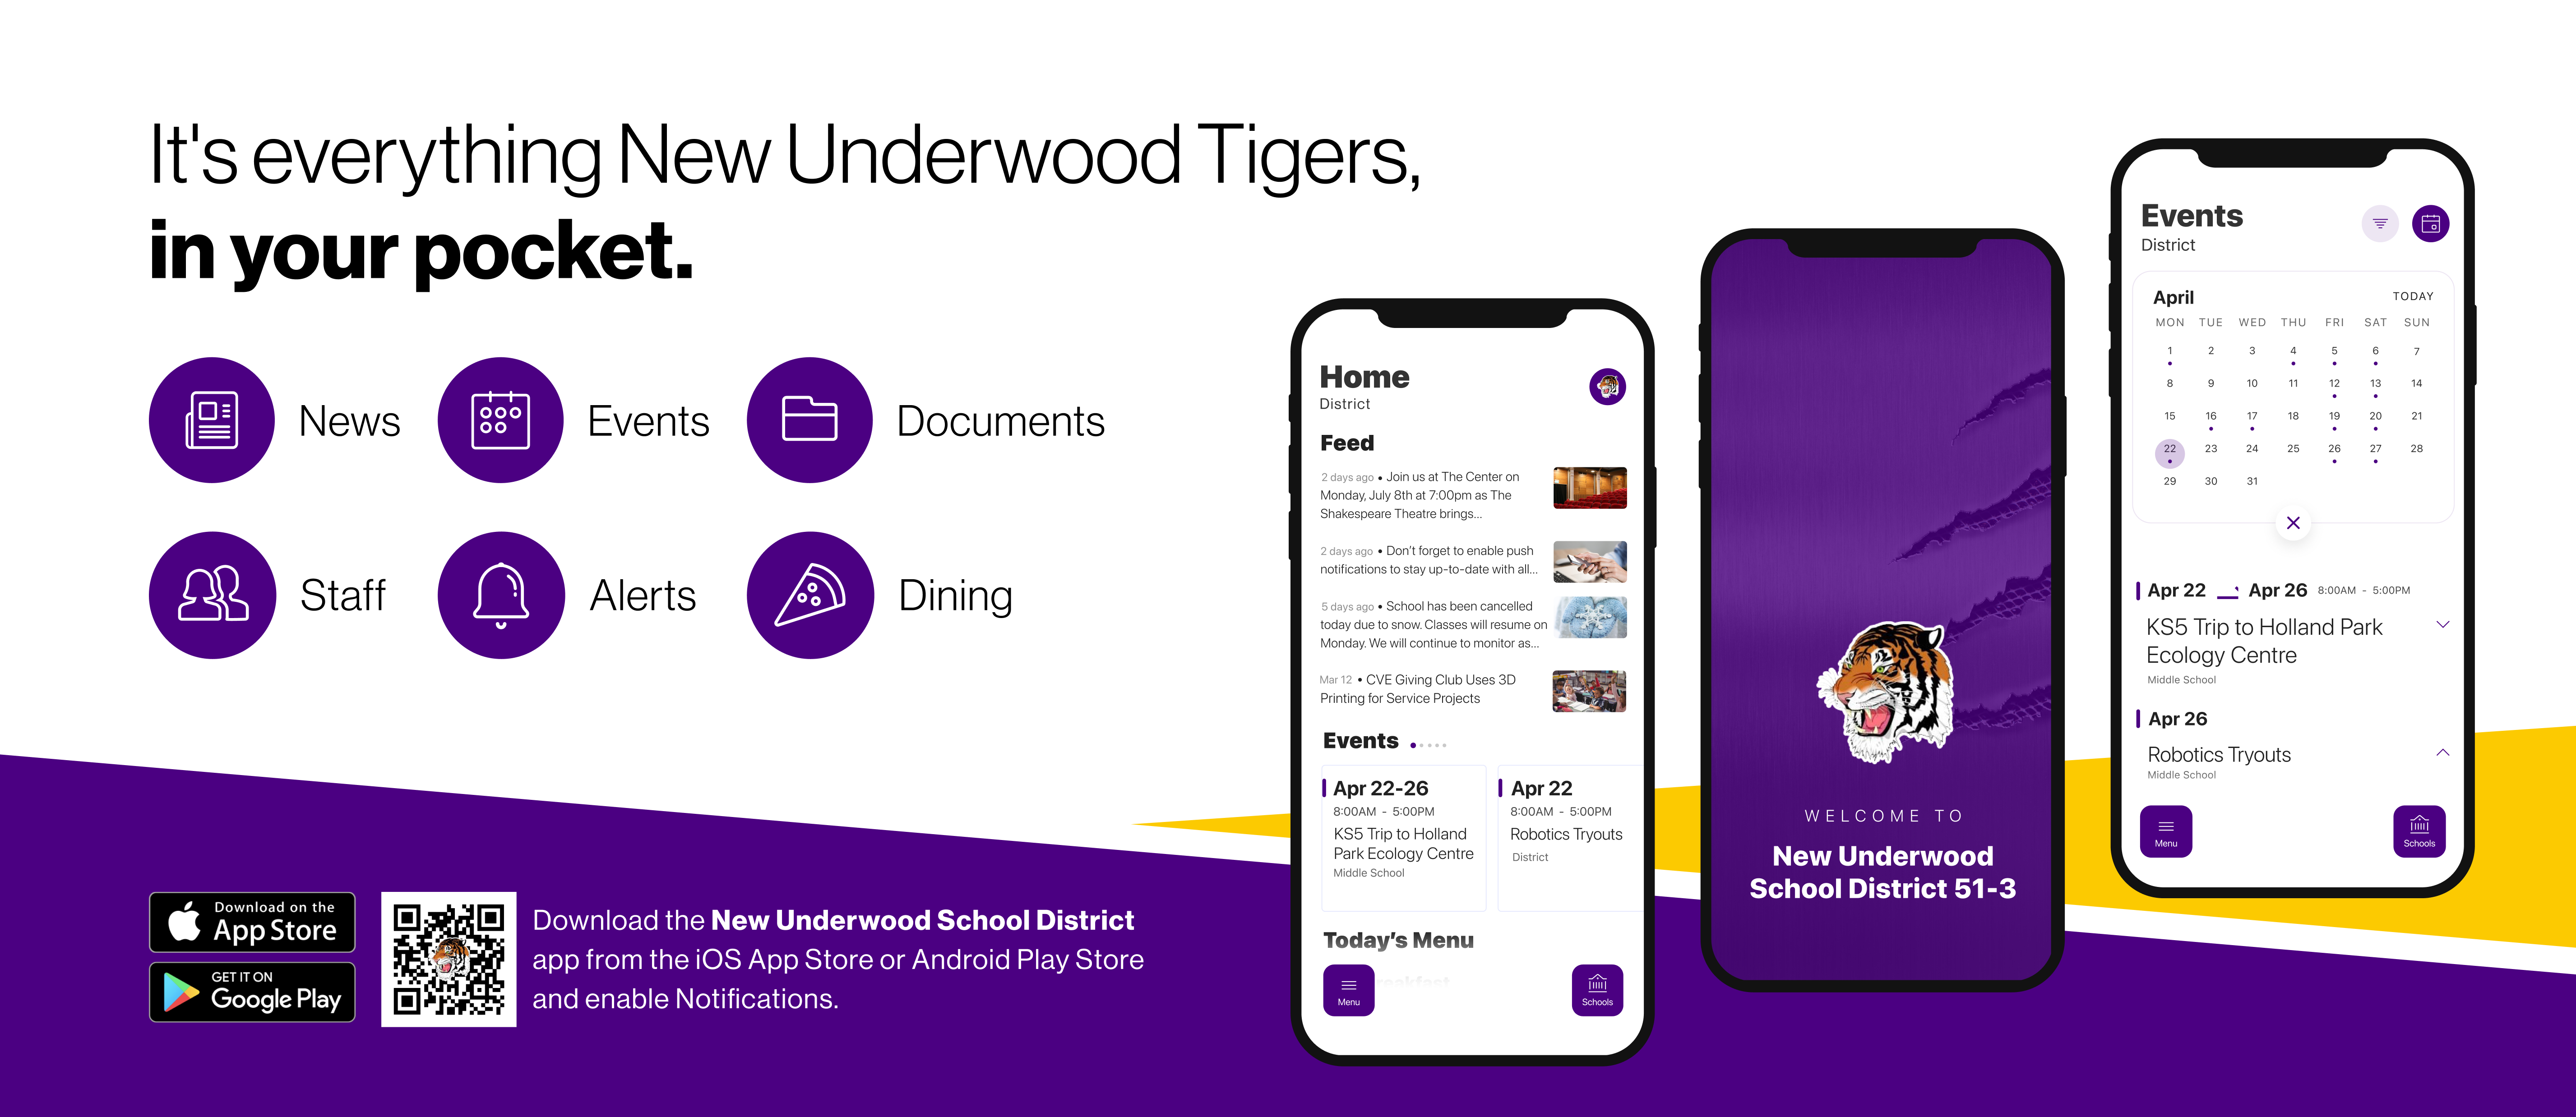 Introducing the New Underwood New App!